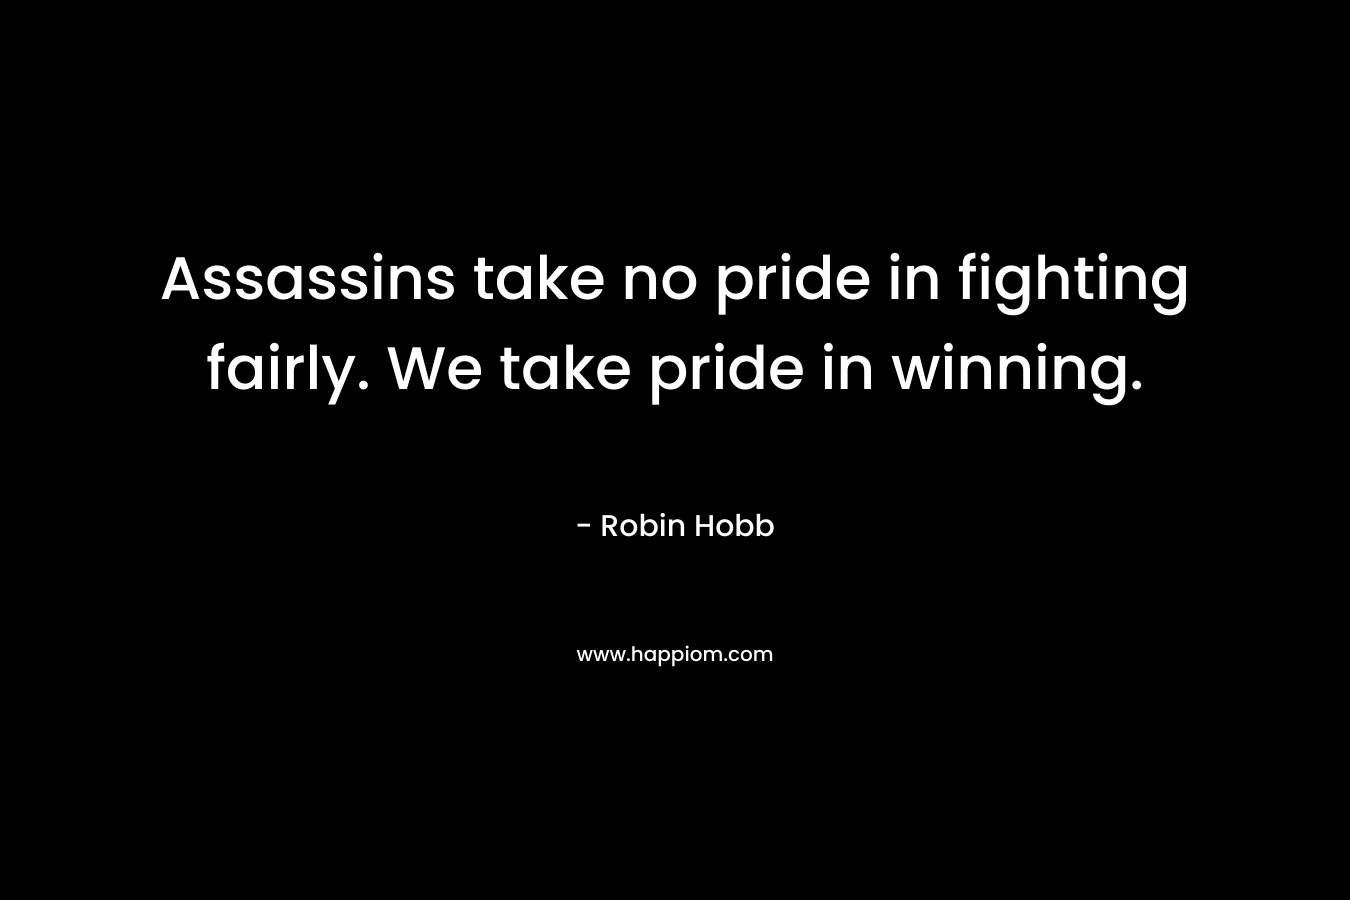 Assassins take no pride in fighting fairly. We take pride in winning.